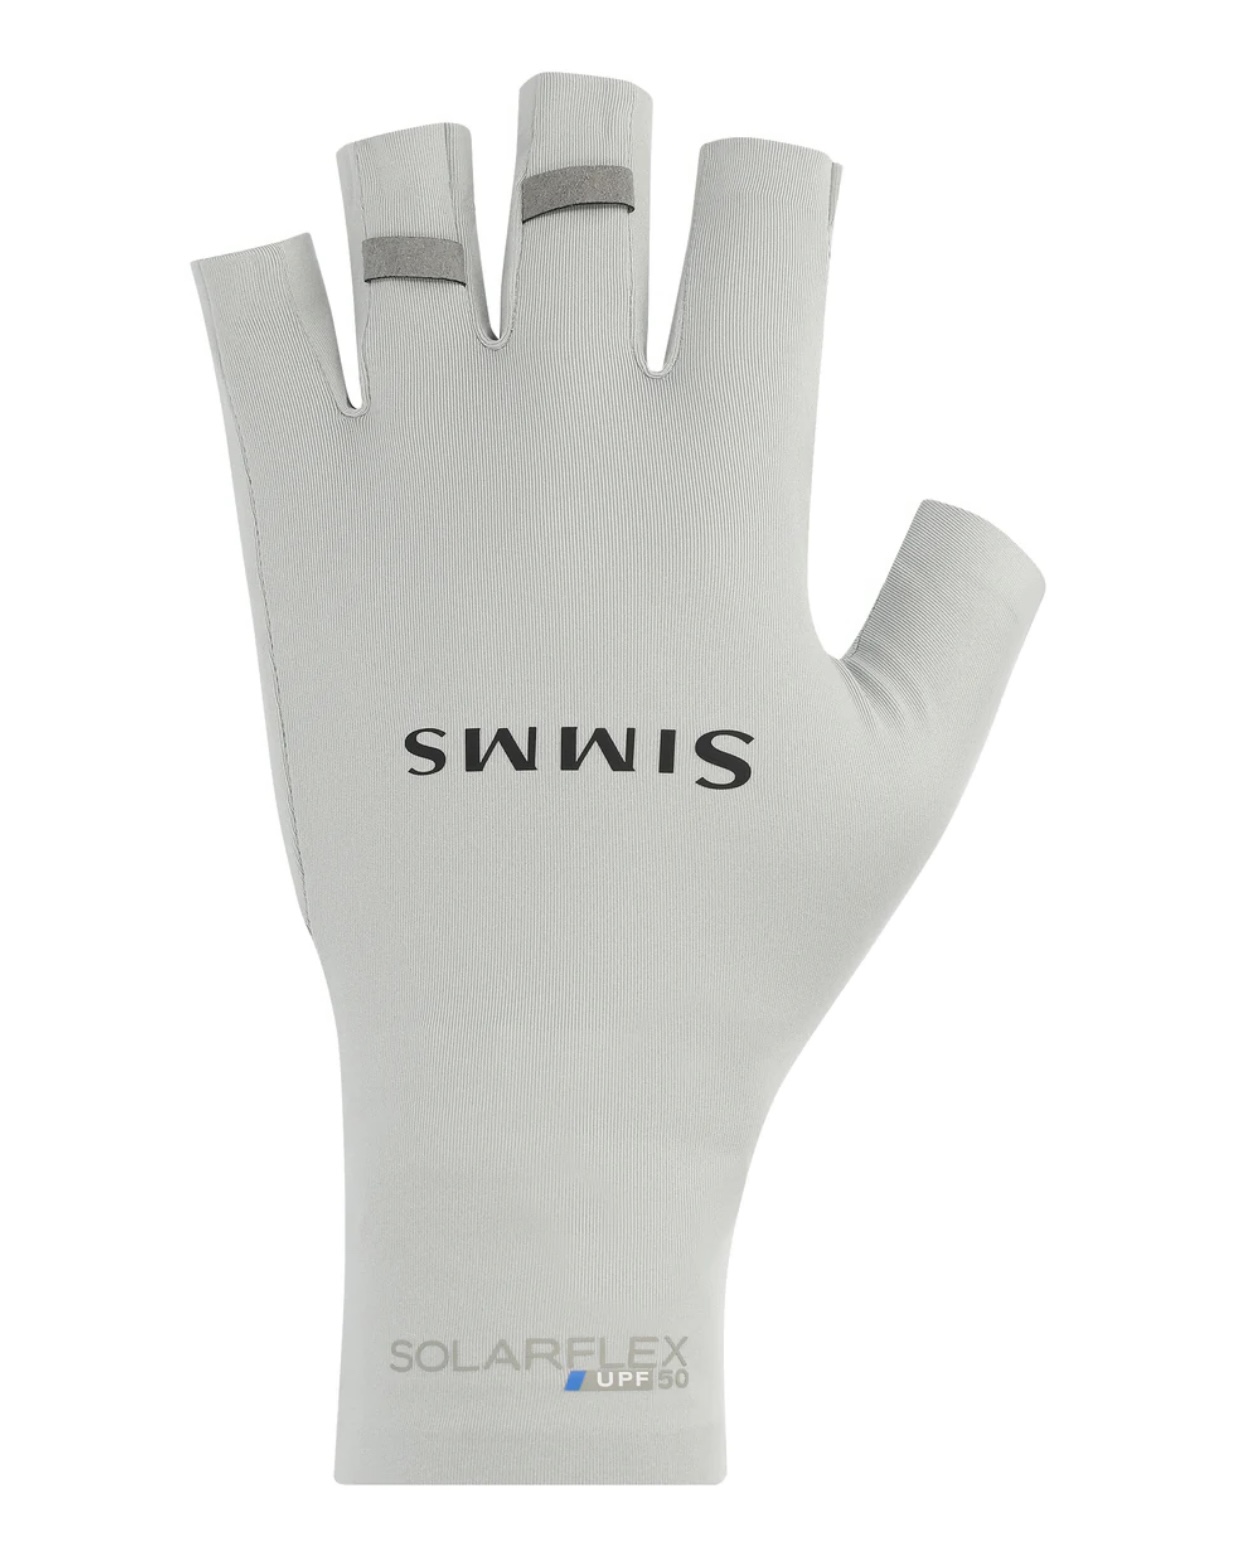 Simms SolarFlex Half-Finger SunGlove - Sterling - Large